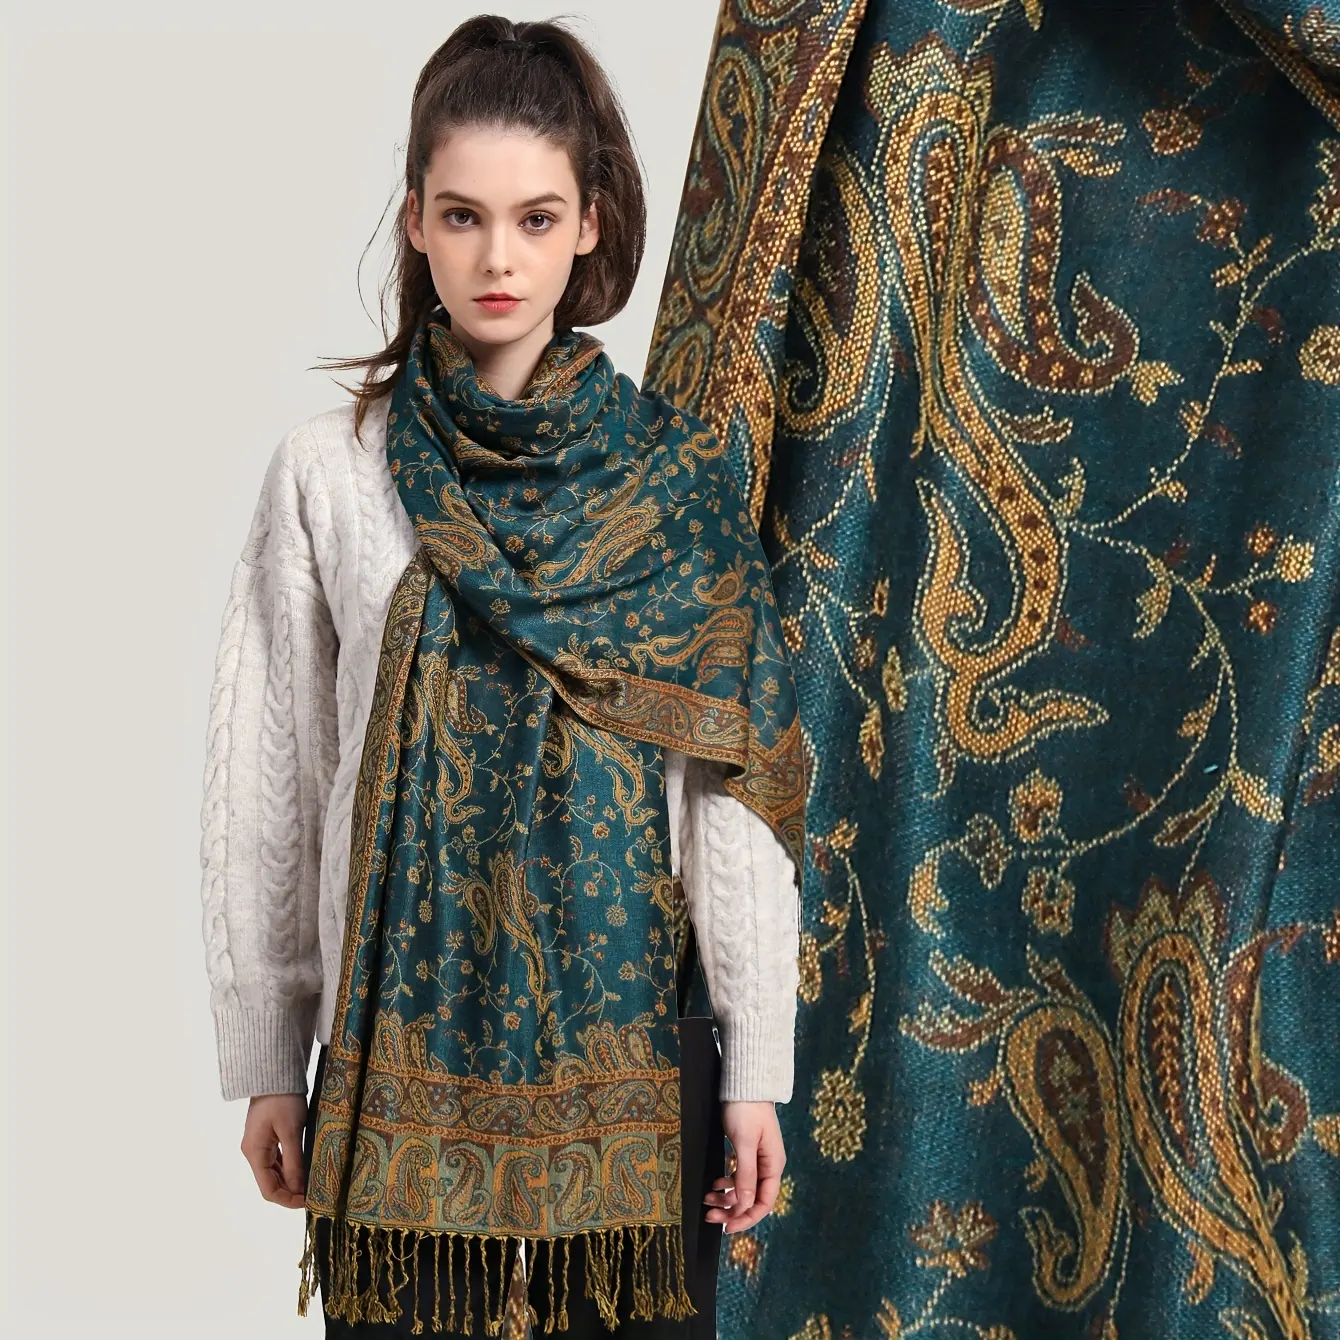 Suave y elegante diseño de lujo Paisley patrón pashmina chal tejido jacquard personalizado pashmina bufanda hijab pañuelo para la cabeza